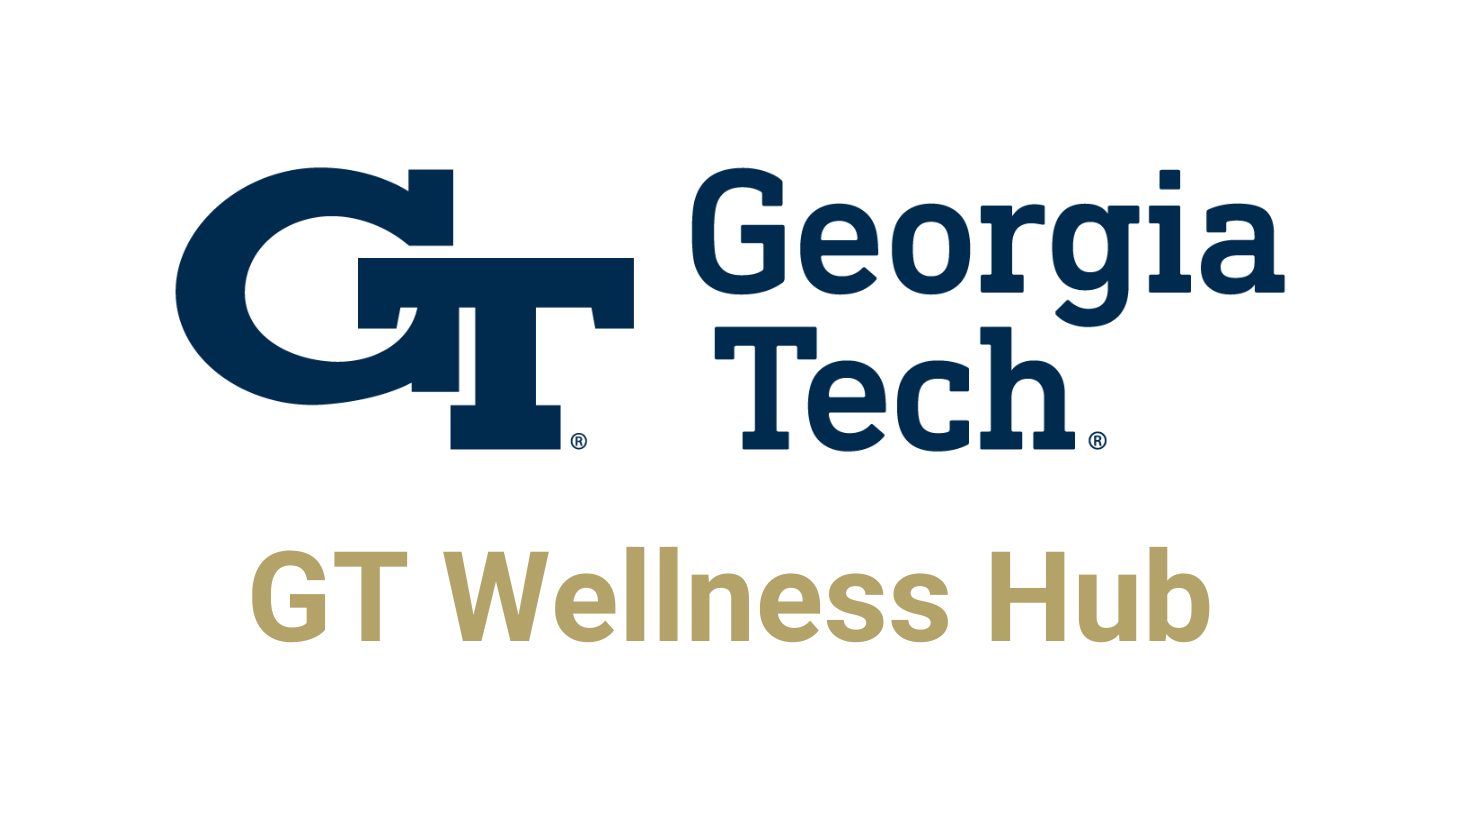 A logo of the GT Wellness Hub